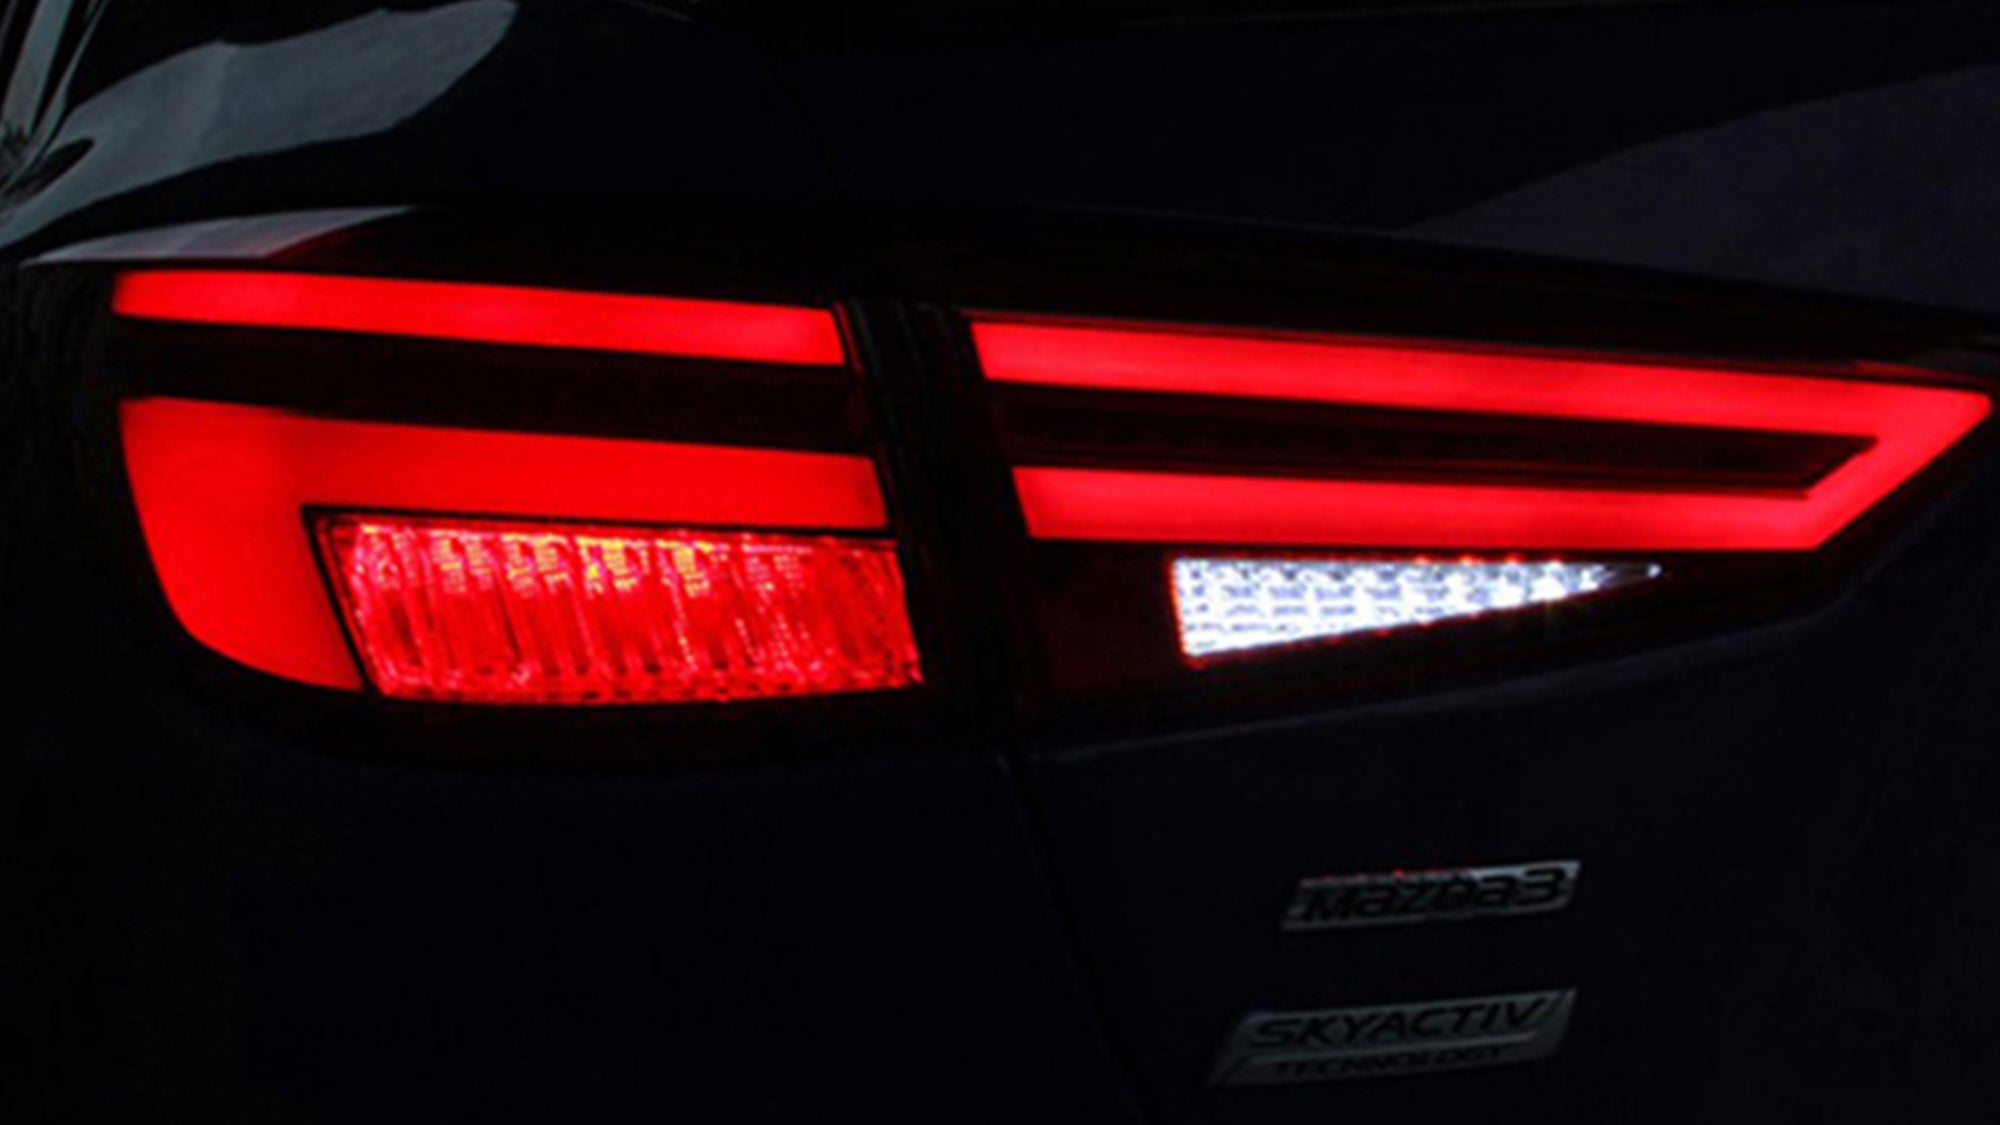 Advantages of LED car lights